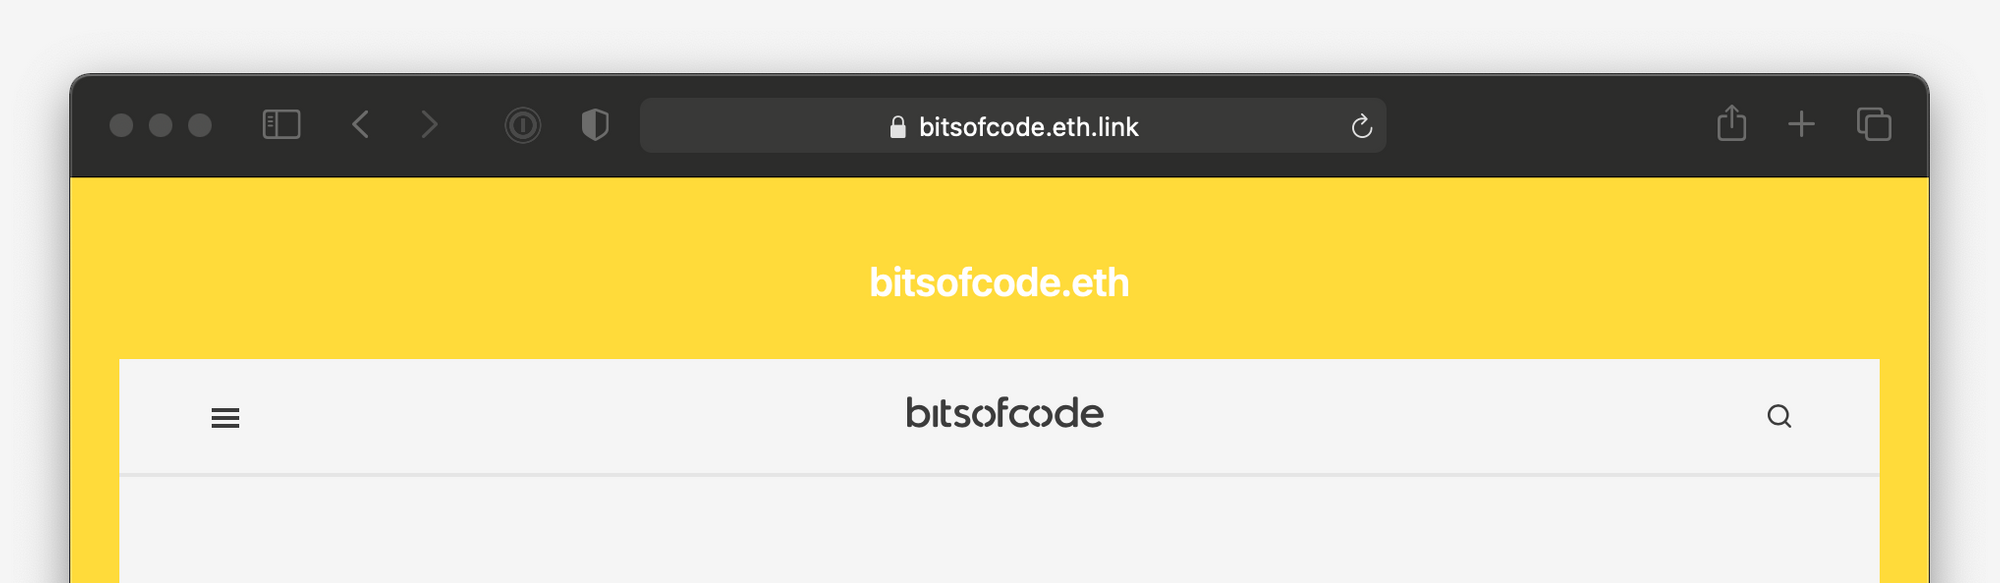 bitsofcode.eth.link in browser url bar